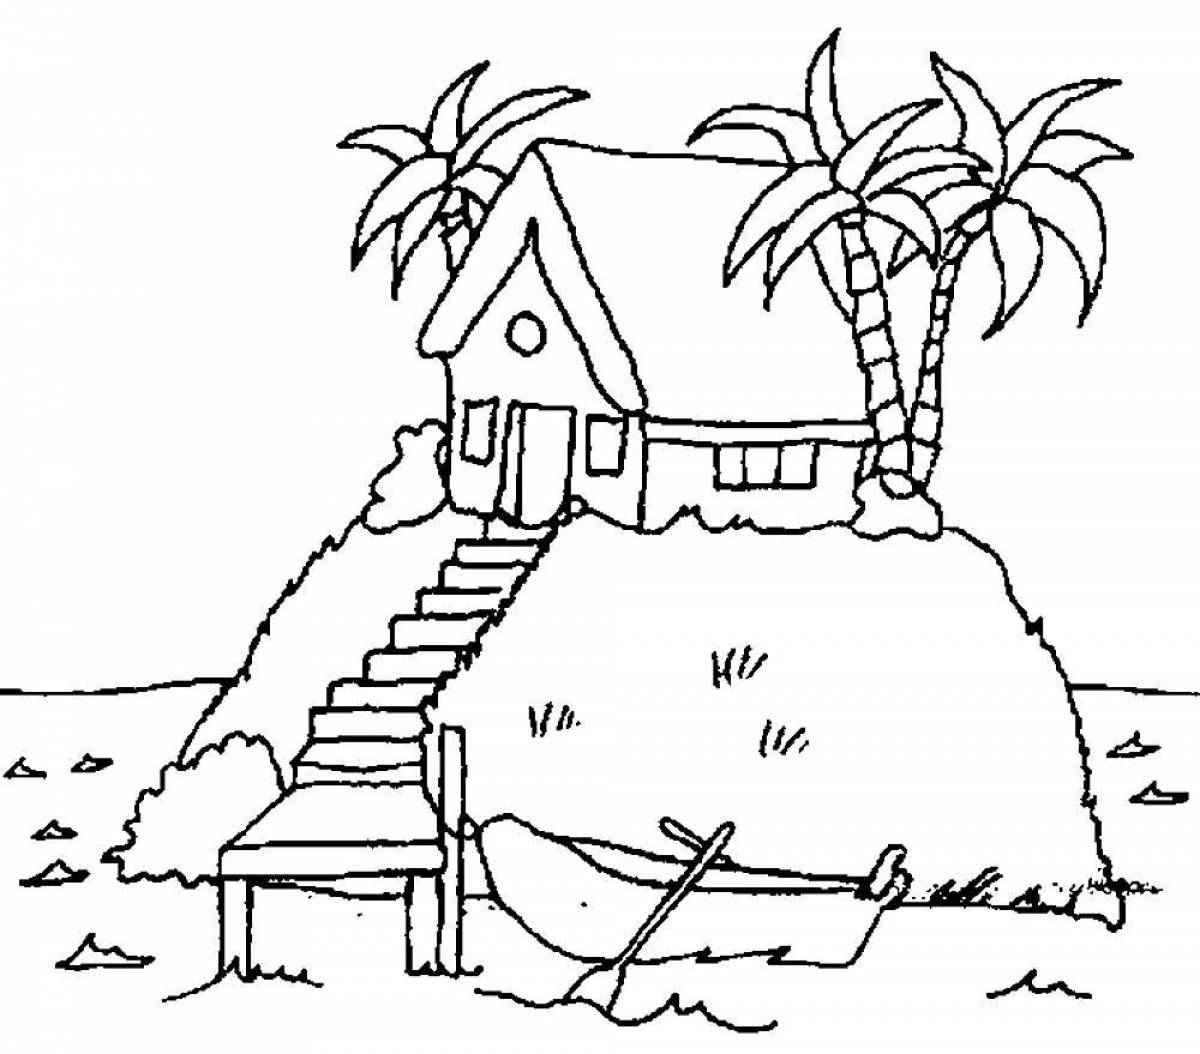 House on the island